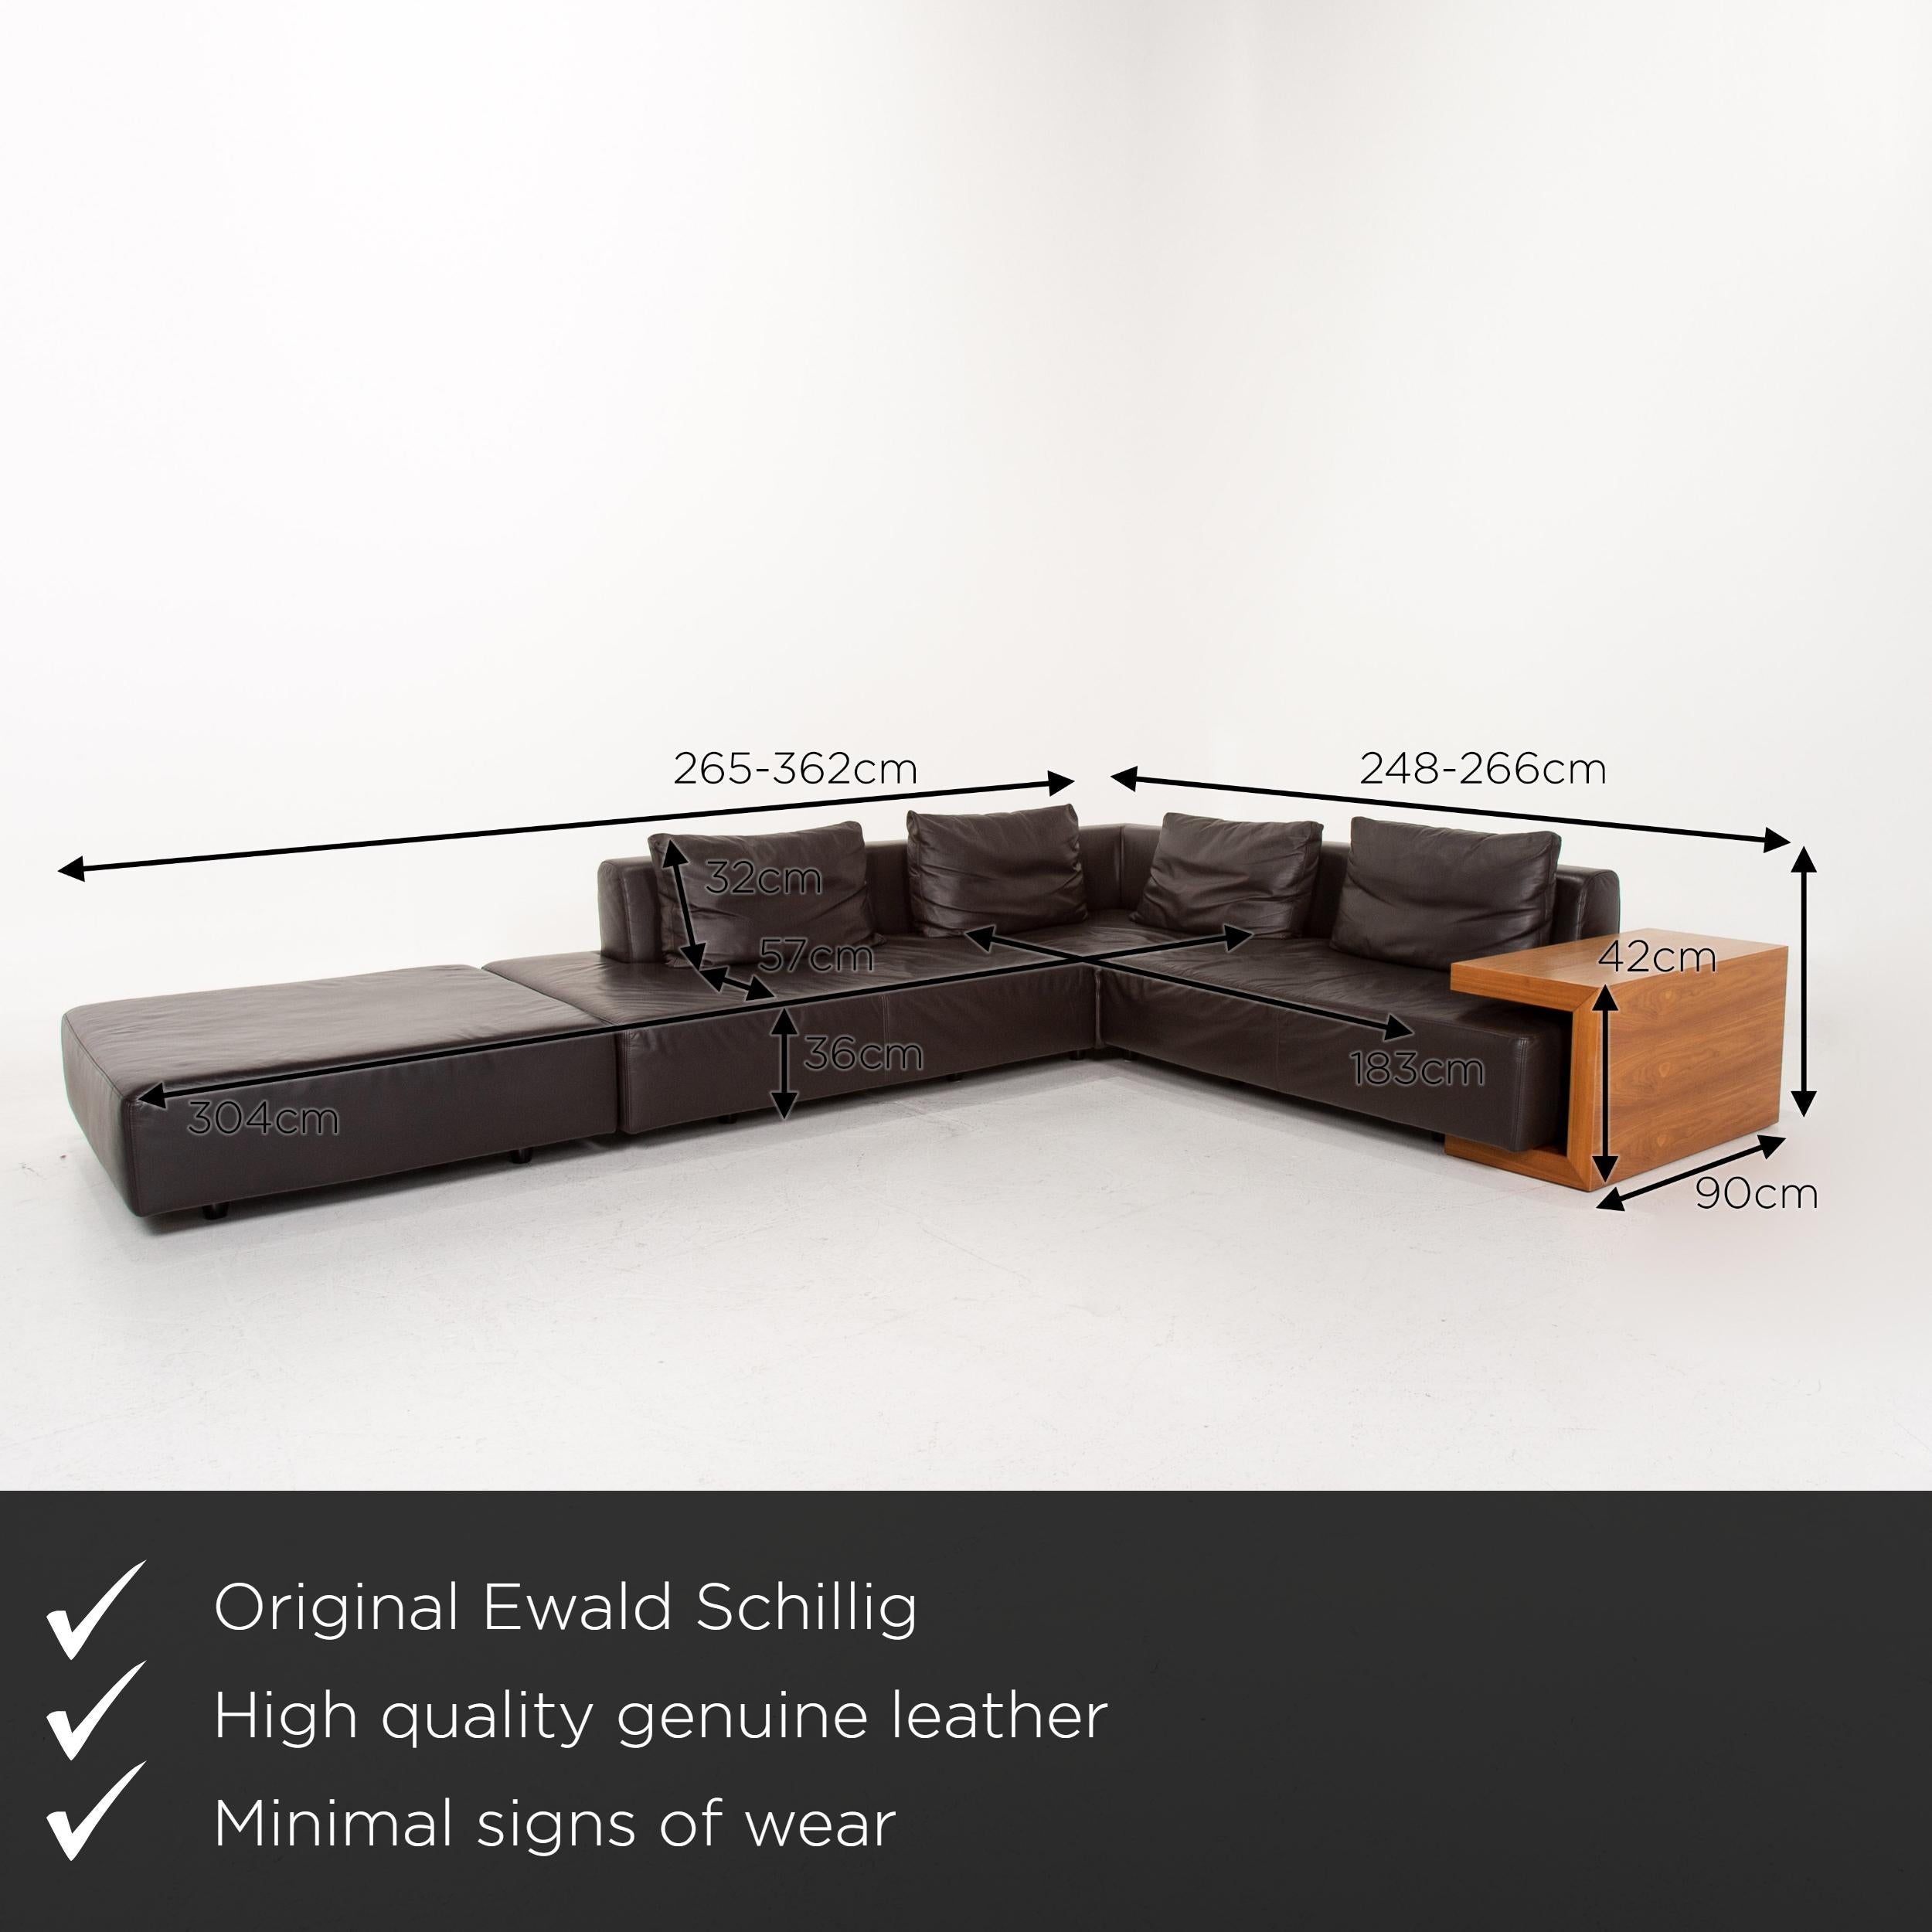 We present to you an Ewald Schillig leather sofa set modular brown dark brown 1x corner sofa 1x.
  
 

 Product measurements in centimeters:
 

Depth 106
Width 362
Height 65
Seat height 36
Seat depth 57
Seat width 304
Back height